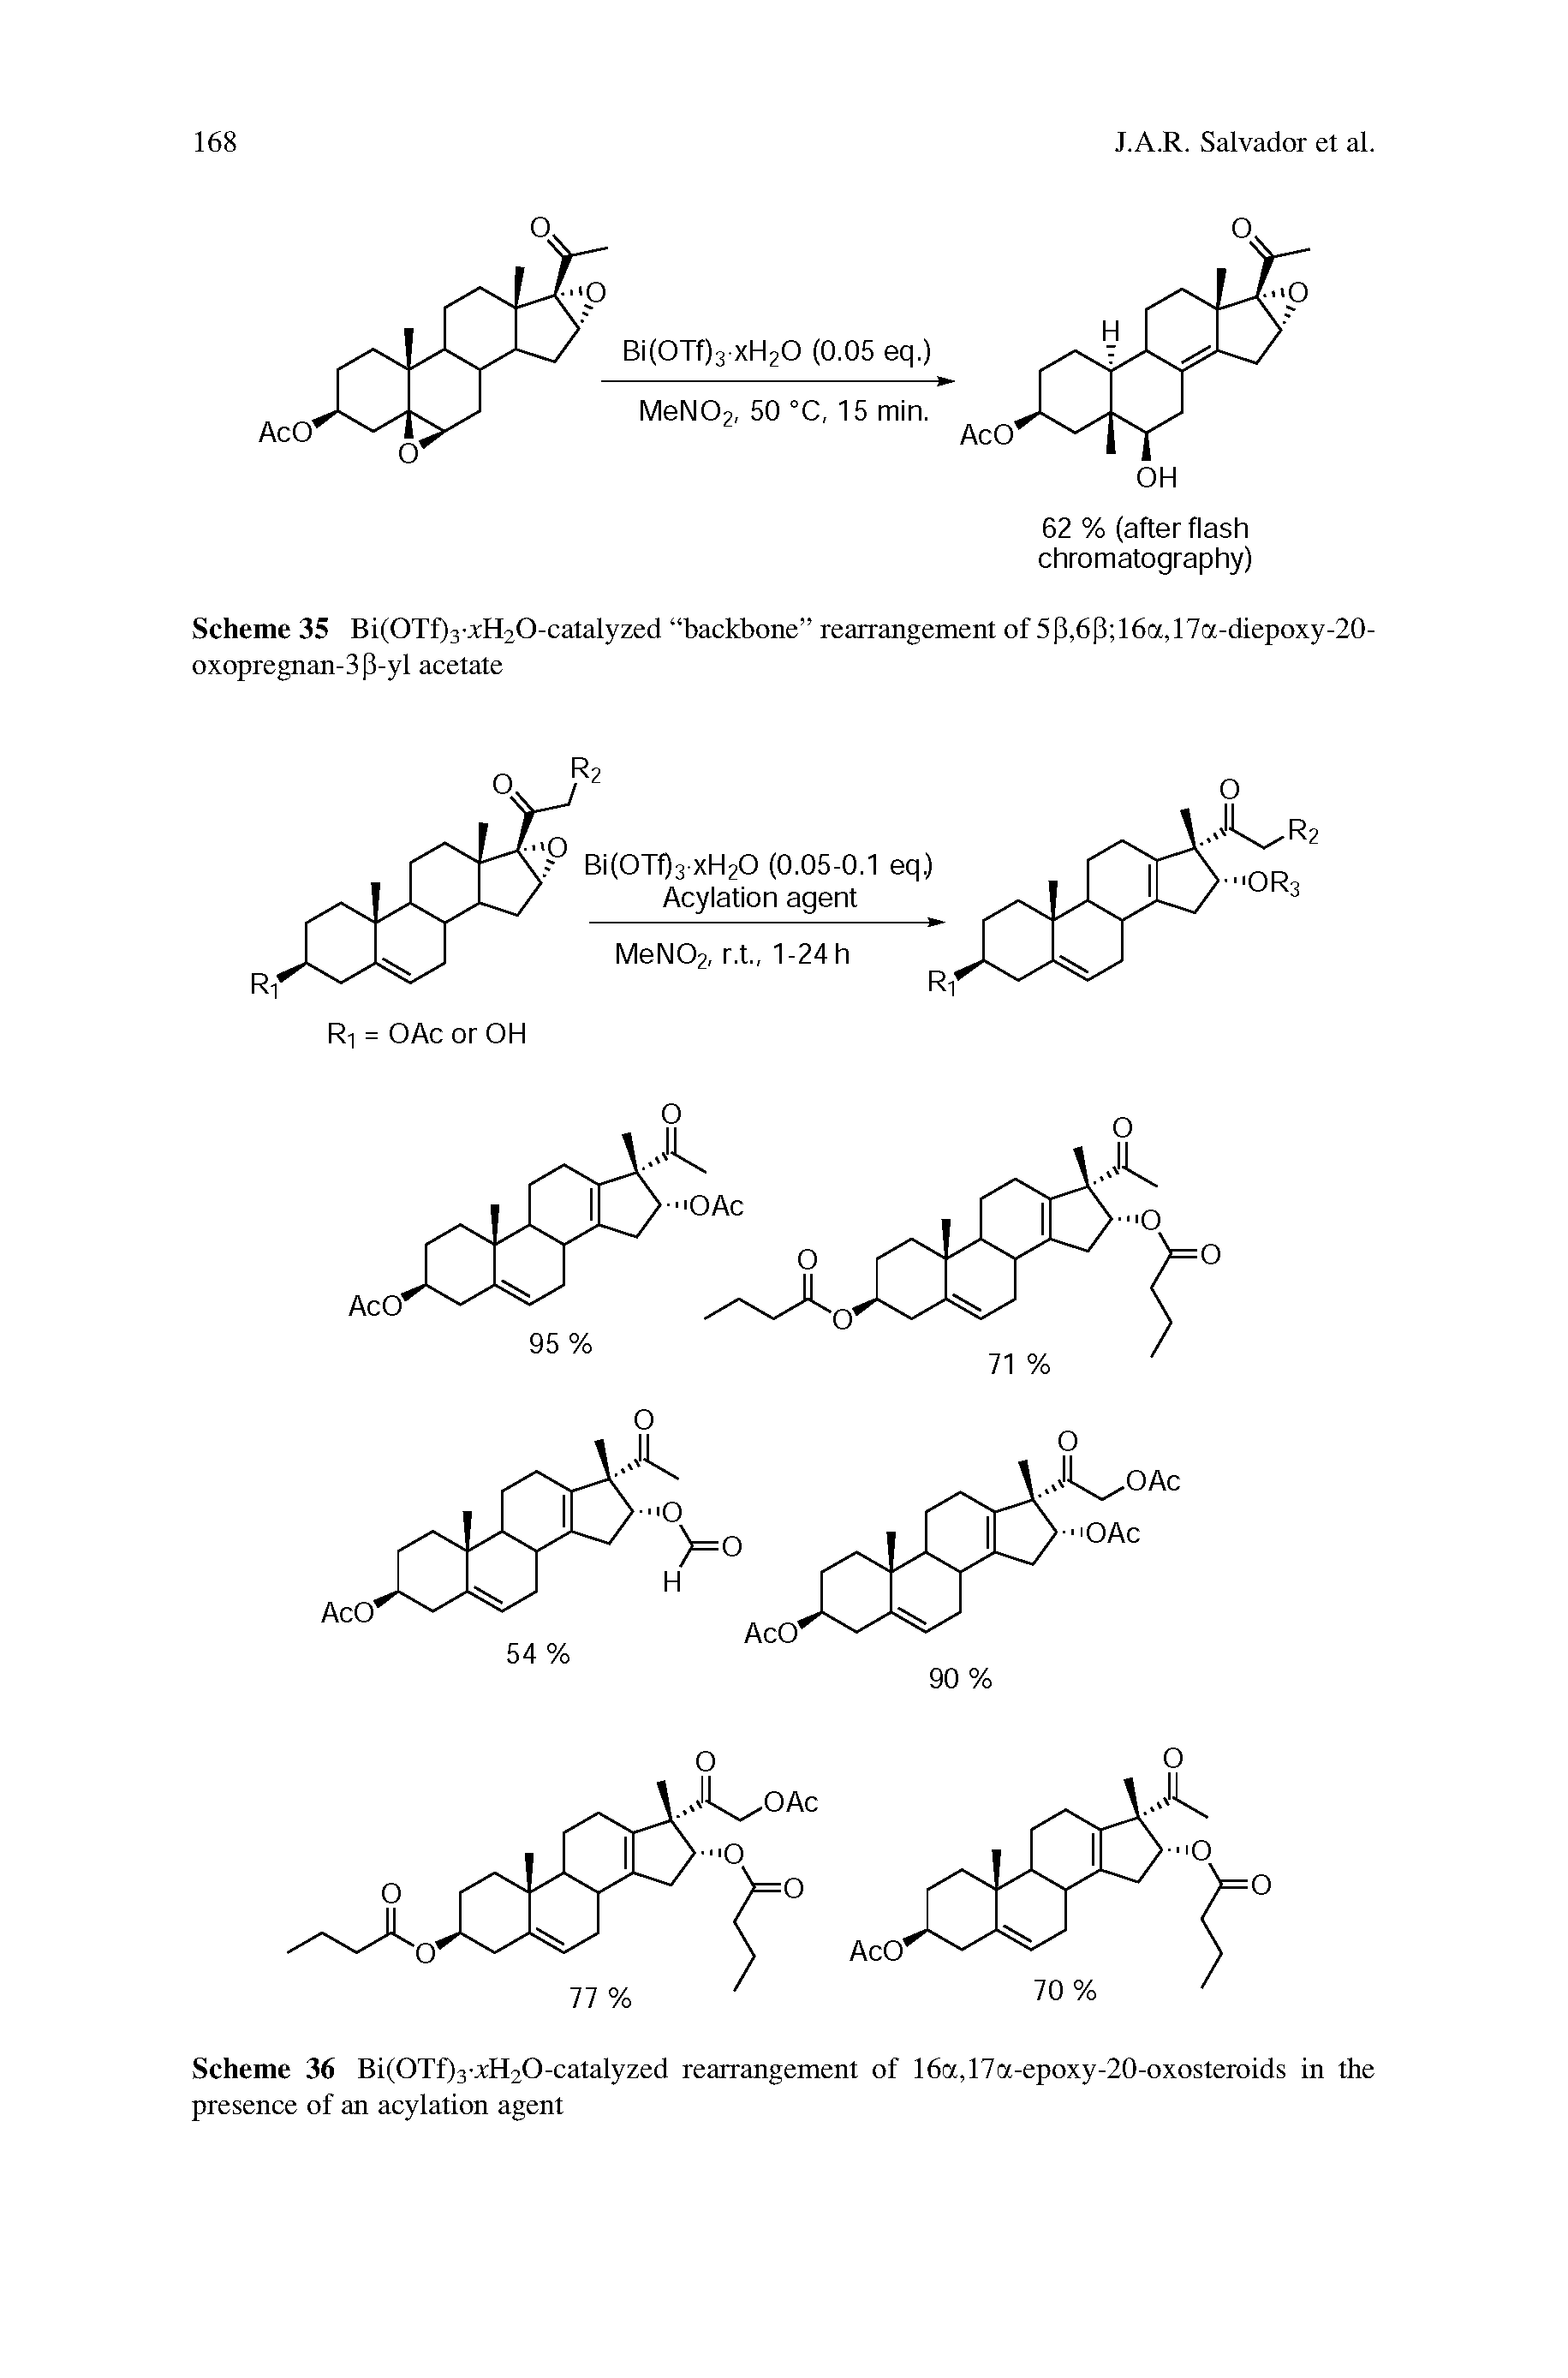 Scheme 35 Bi(0Tf)3-xH20-catalyzed backbone rearrangement of 5p,6P 16a,17a-diepoxy-20-oxopregnan-3P-yl acetate...